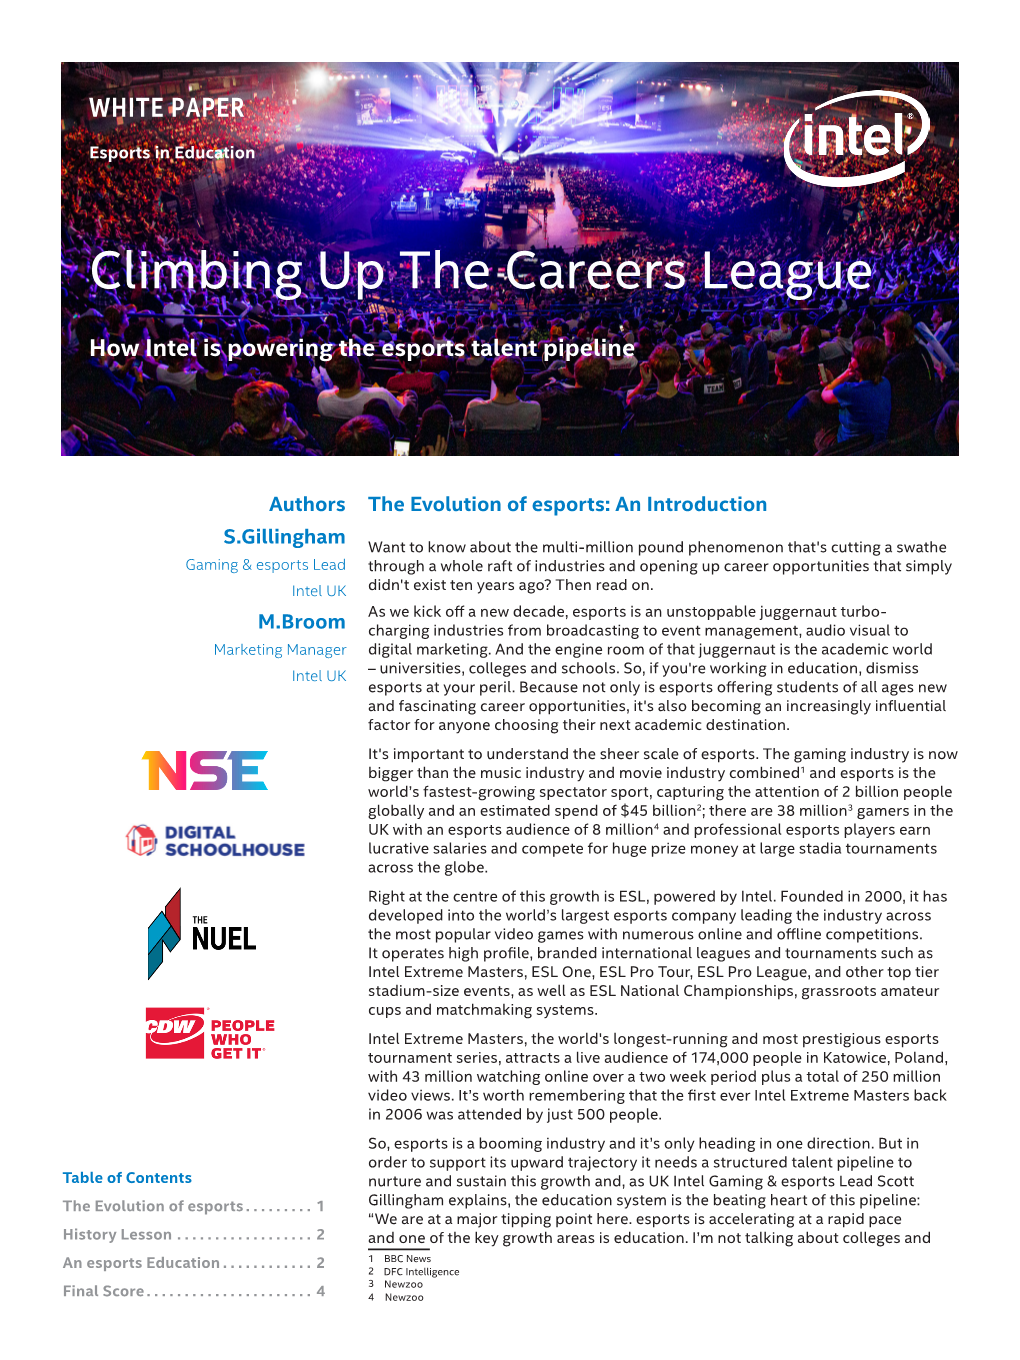 Climbing up the Careers League